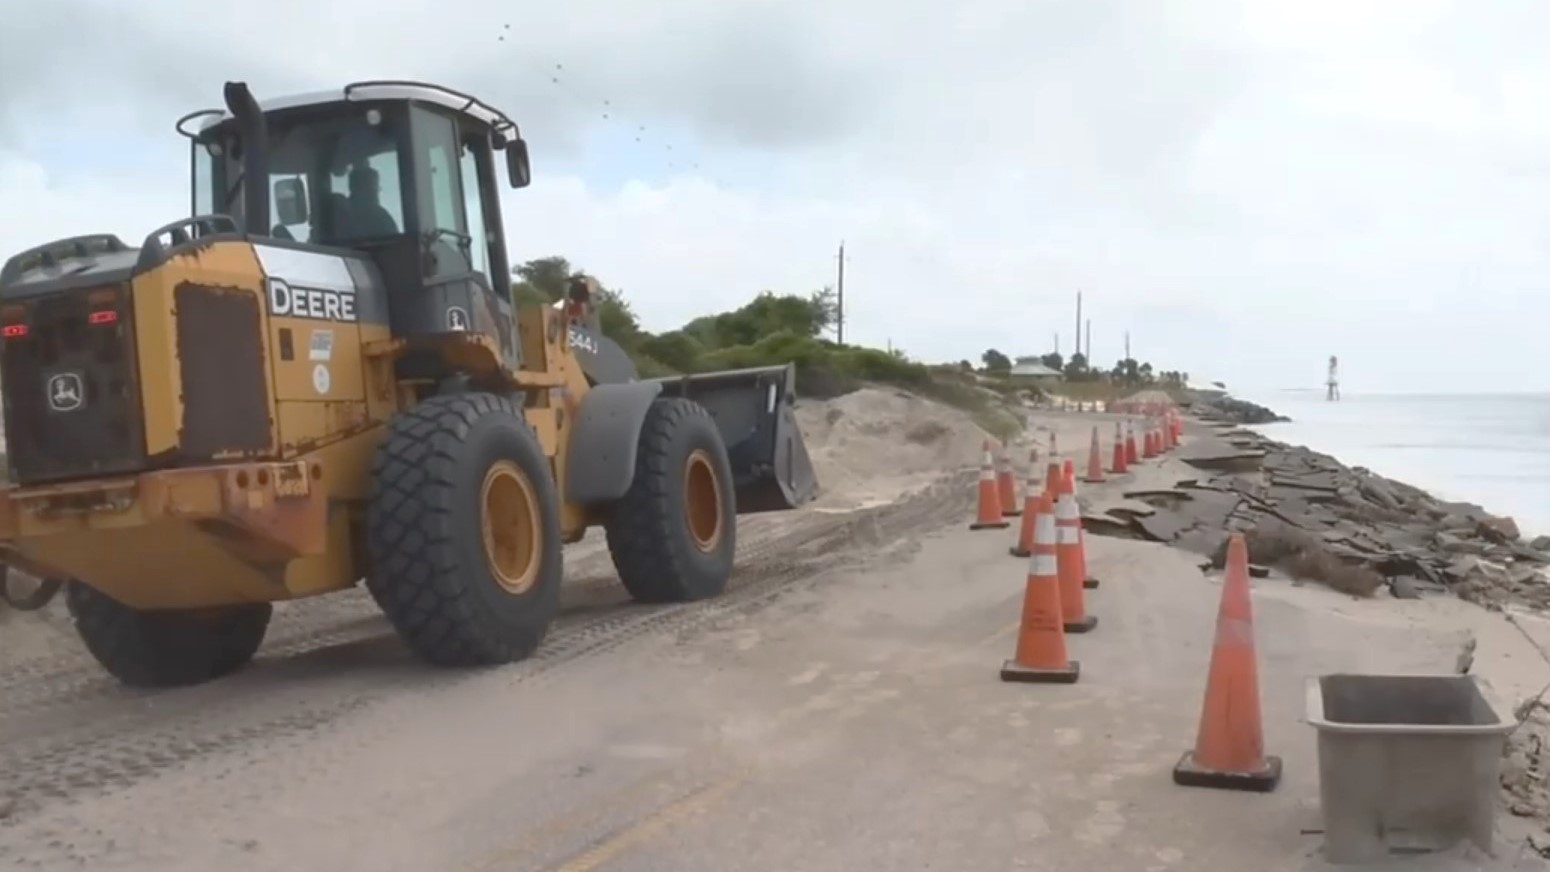 Workers rebuild the road at Huguenot Park. | News4Jax